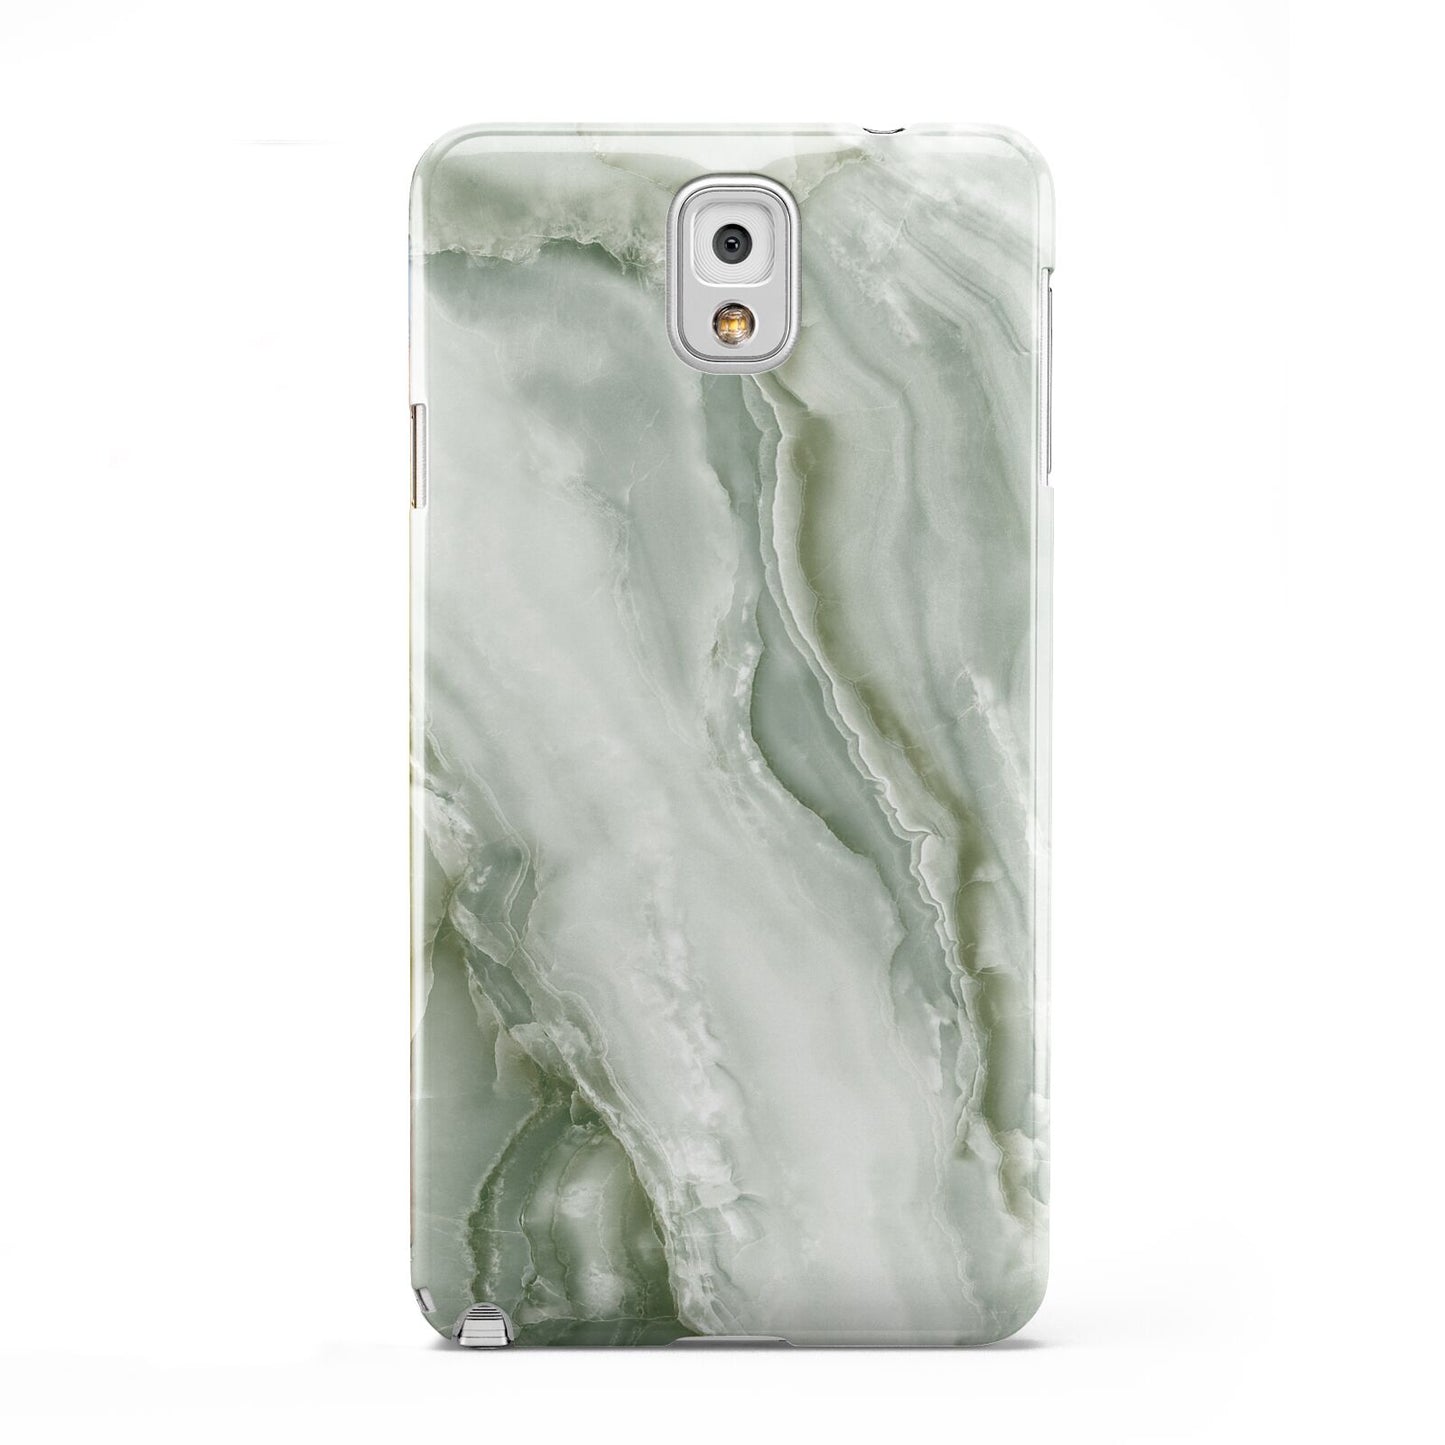 Pistachio Green Marble Samsung Galaxy Note 3 Case